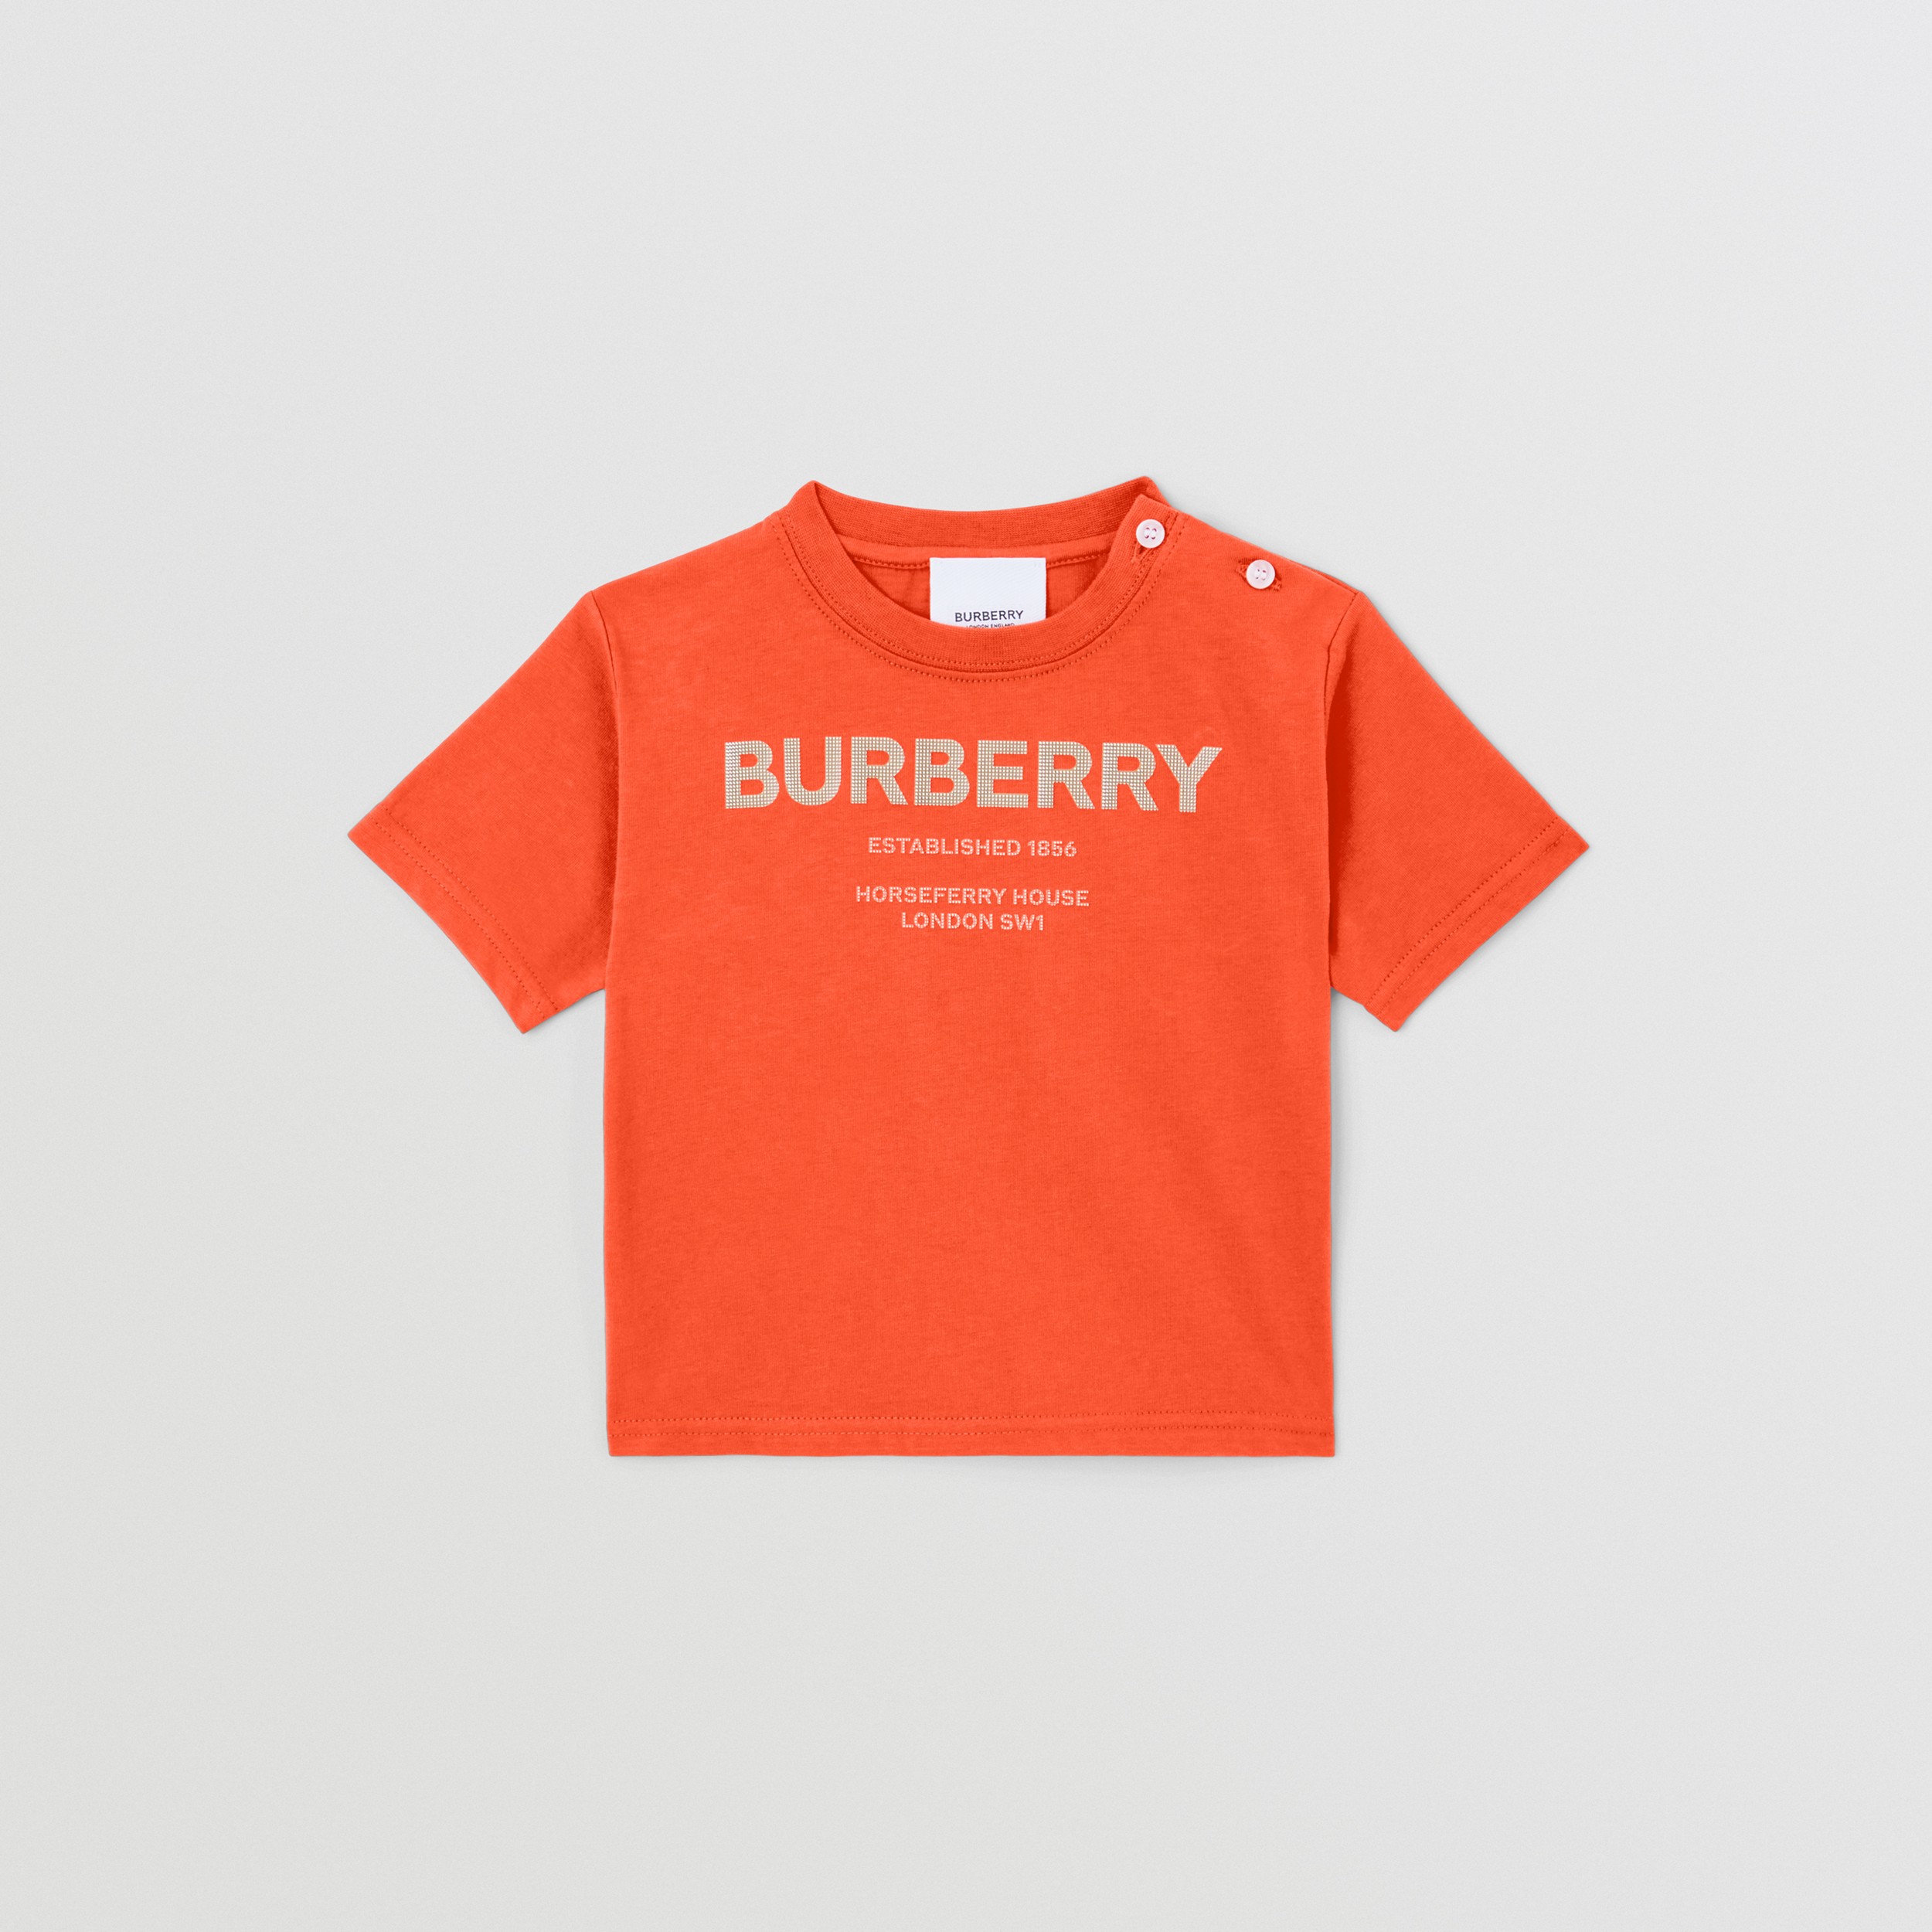 T-shirt BURBERRY 3 months black Tops Kids Baby Burberry Clothing Burberry Kids Tops Burberry Kids Tops T-shirts Burberry Kids Top T-shirts Burberry Kids 